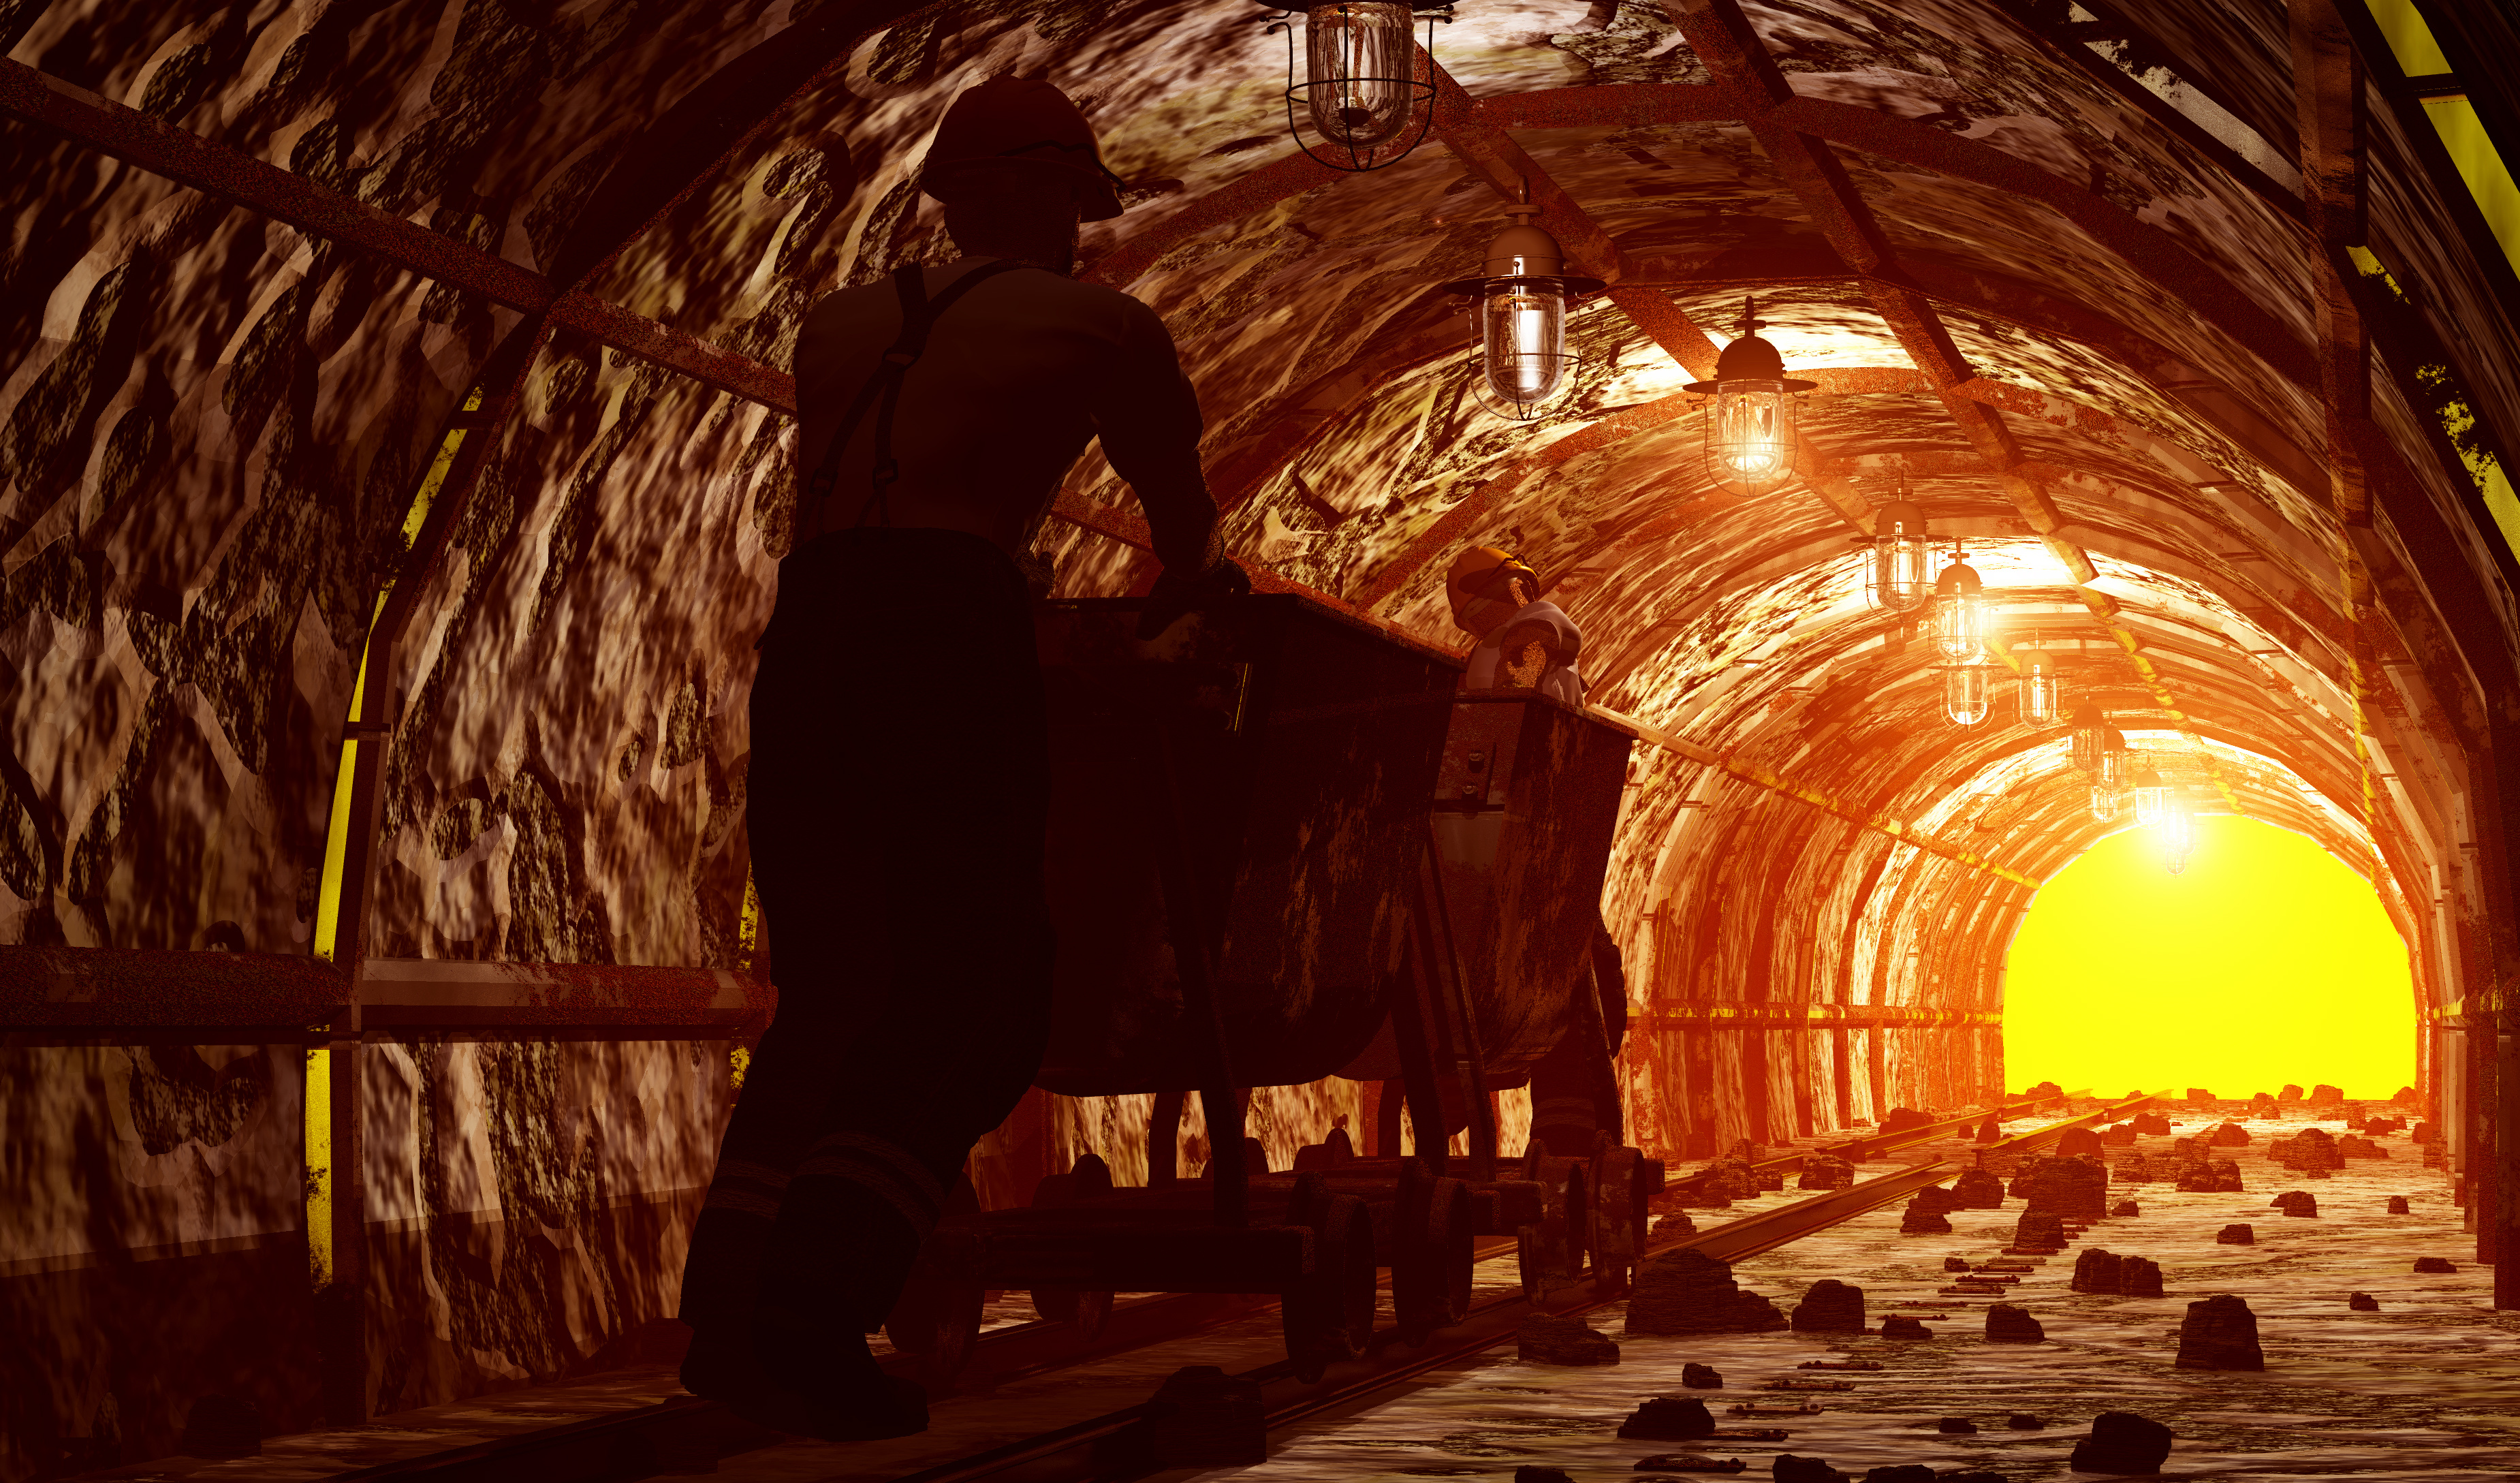 Miner Pushing underground ore cart on rails - Part of a mining fleet operation.